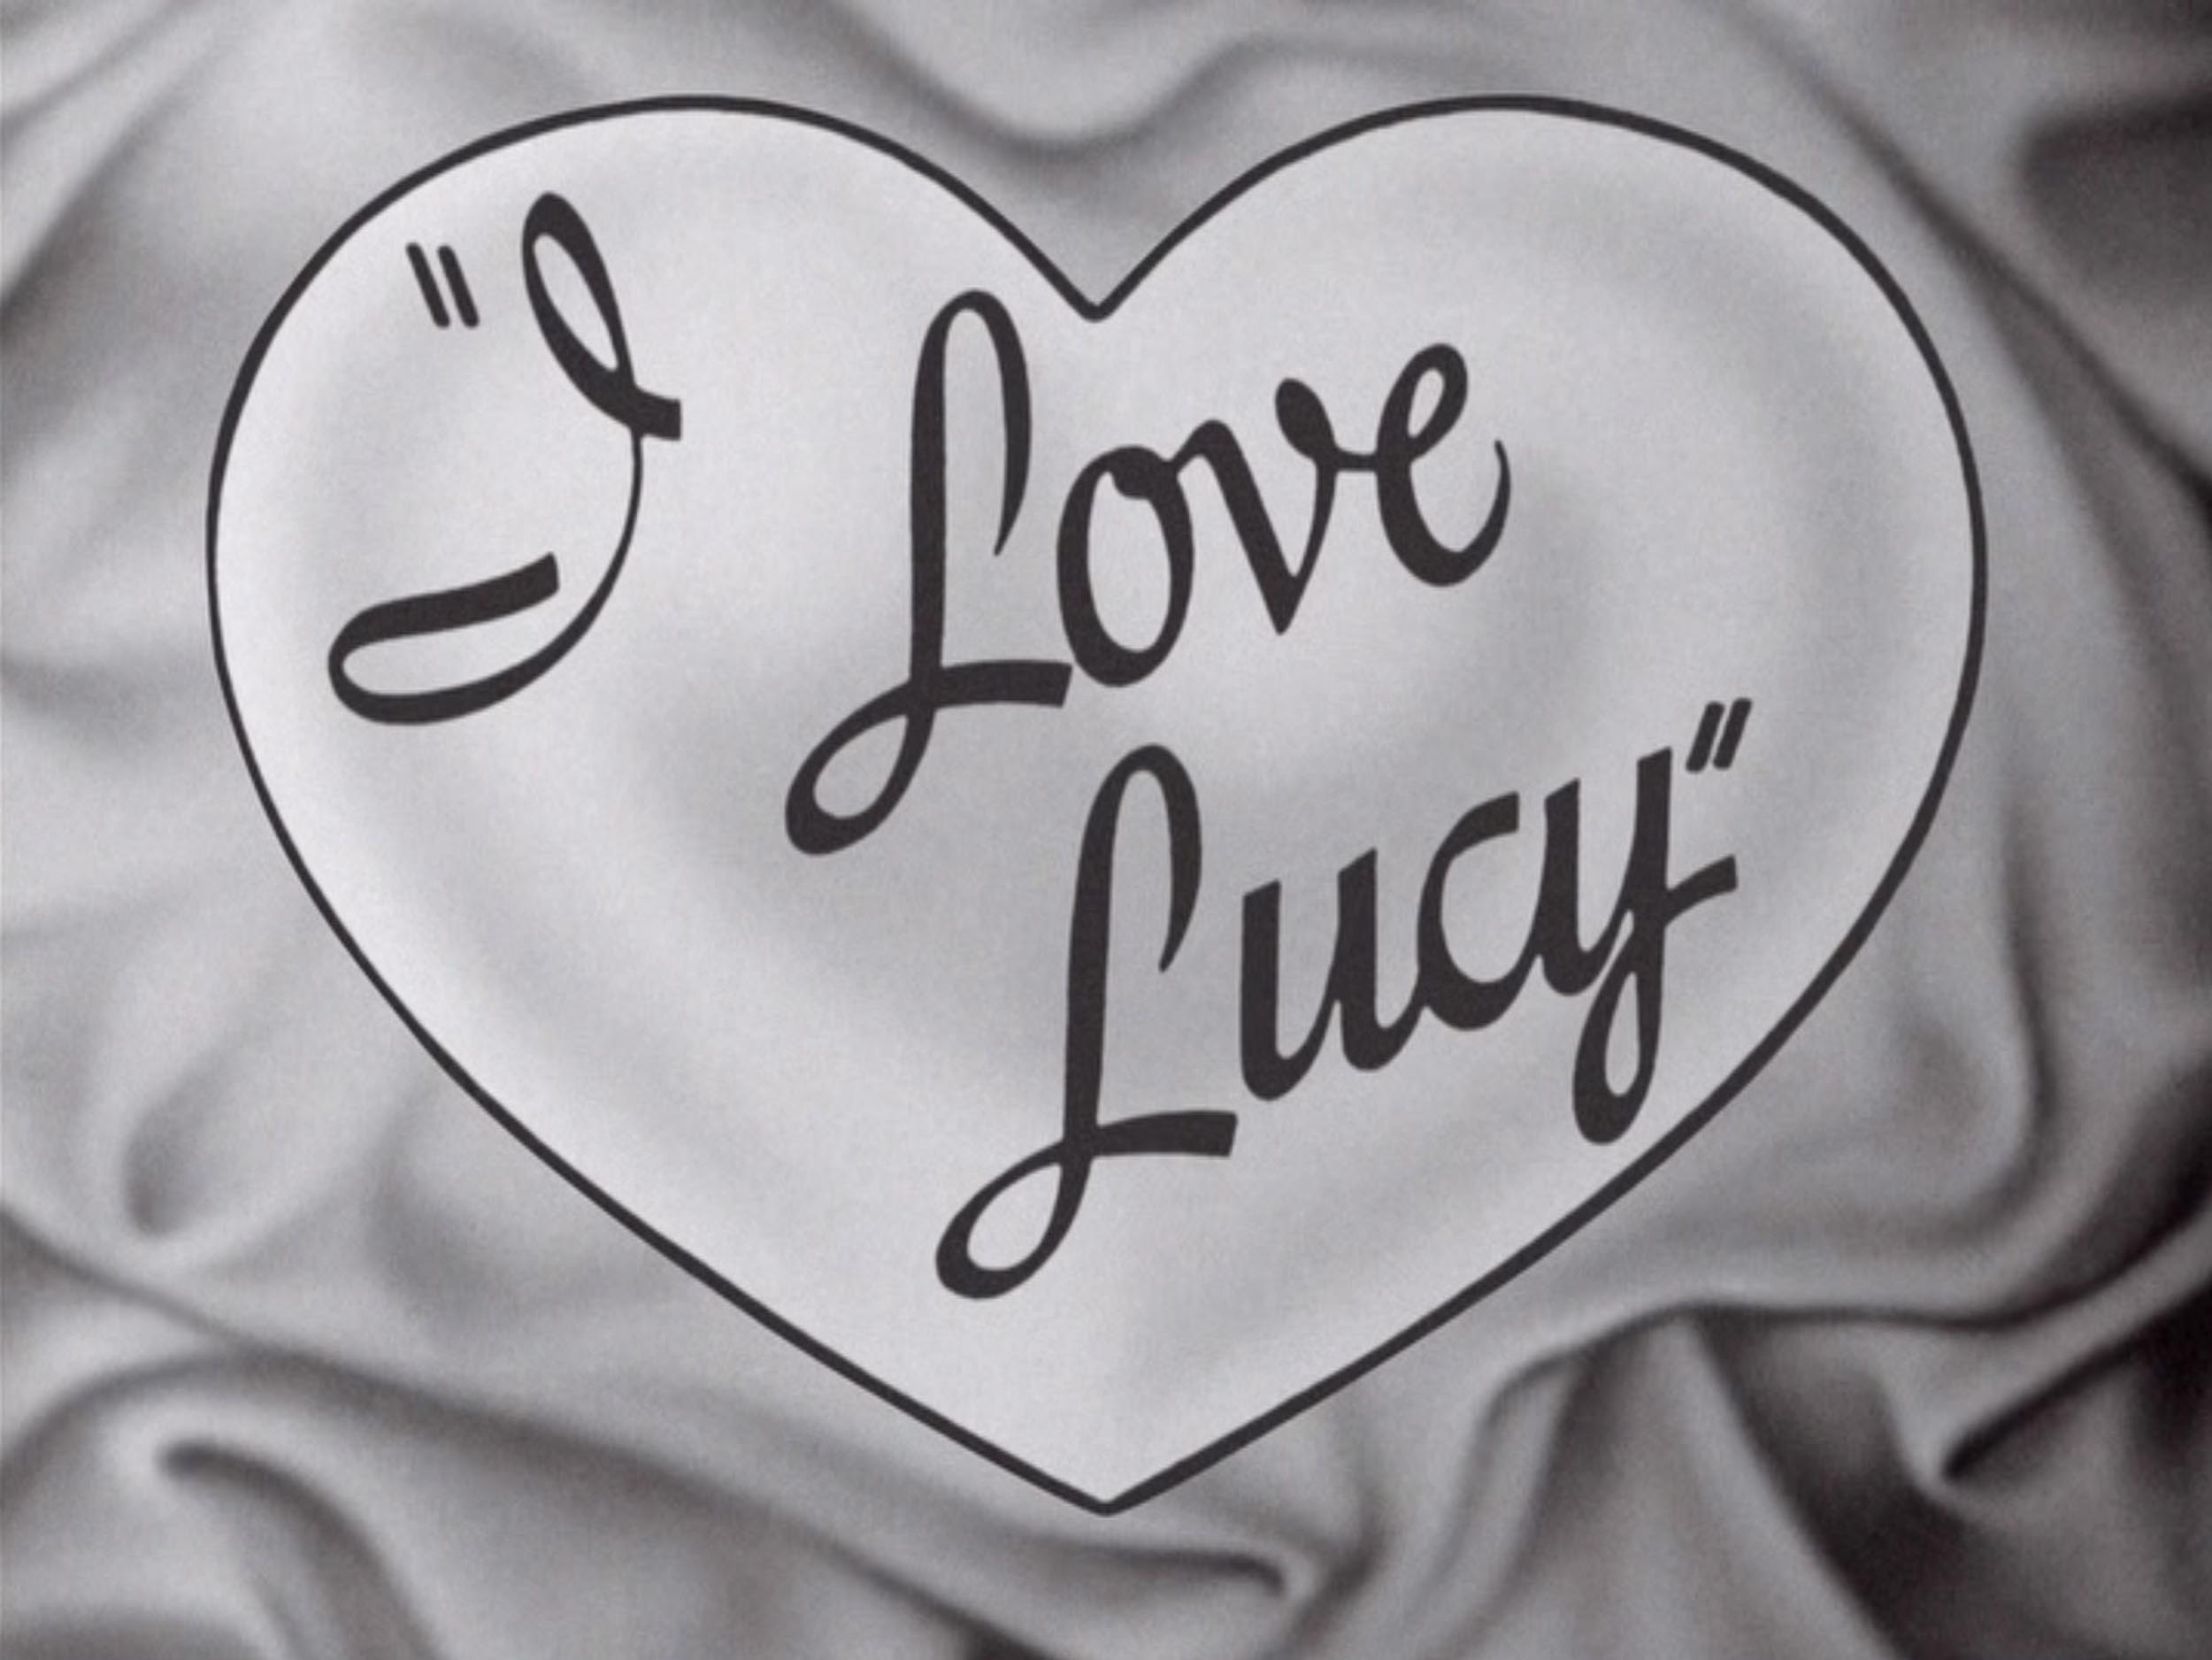 7-i-love-lucy-trivia.jpg